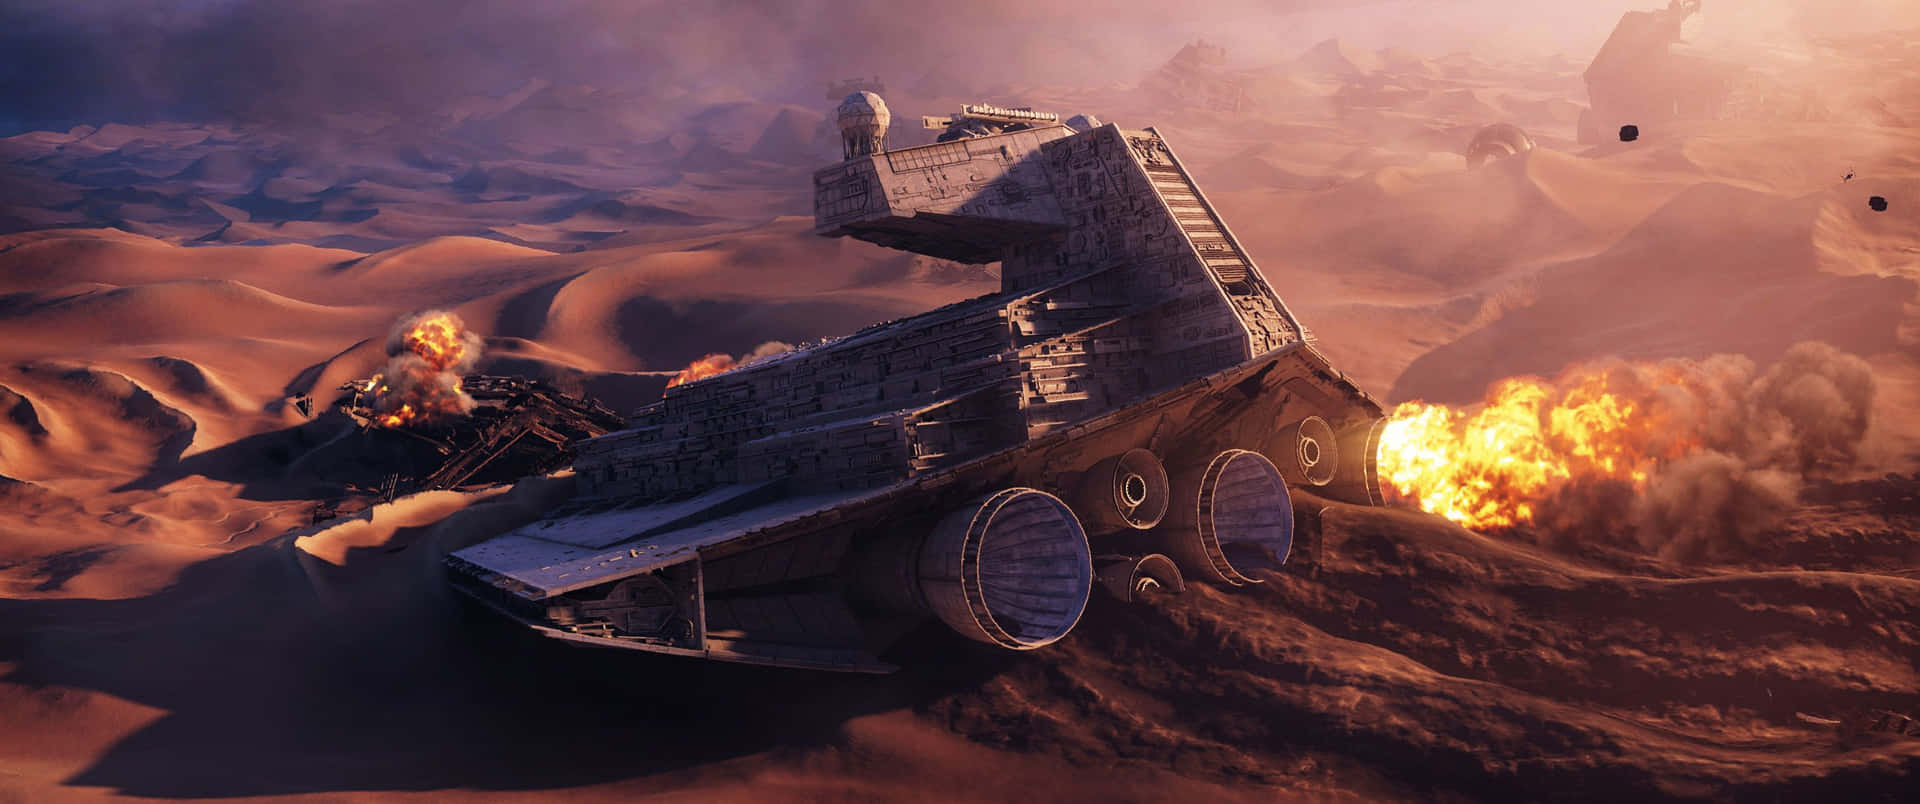 Star Wars Battlefront 2 Bildschirmfotos Wallpaper